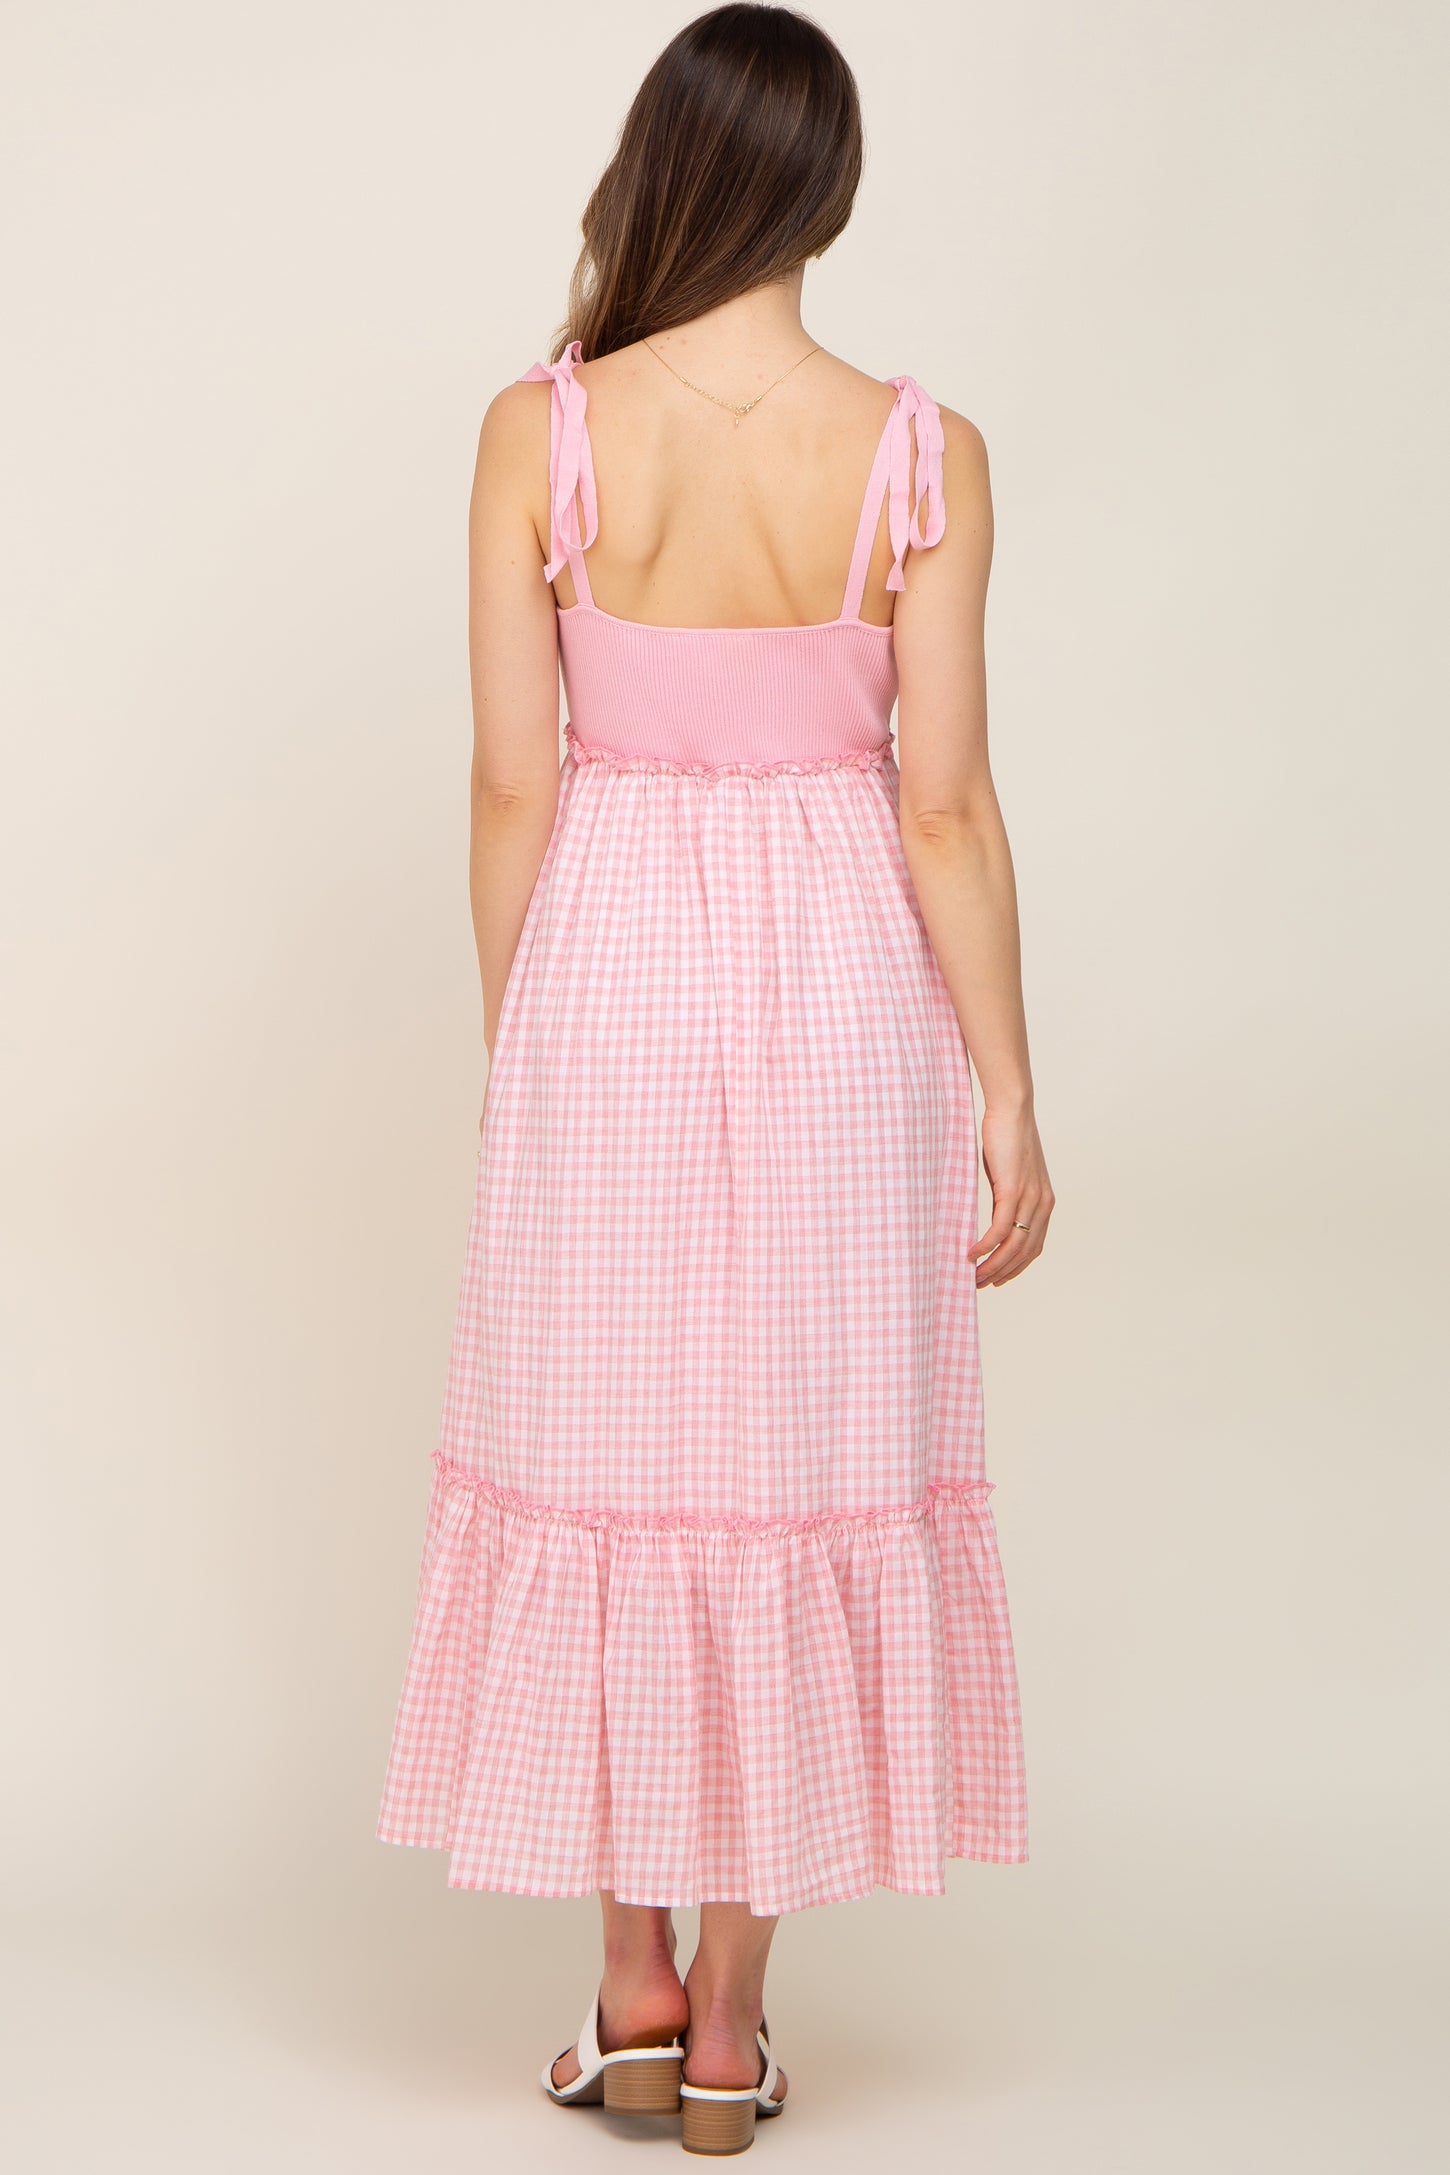 Pink Gingham Colorblock Maternity Dress